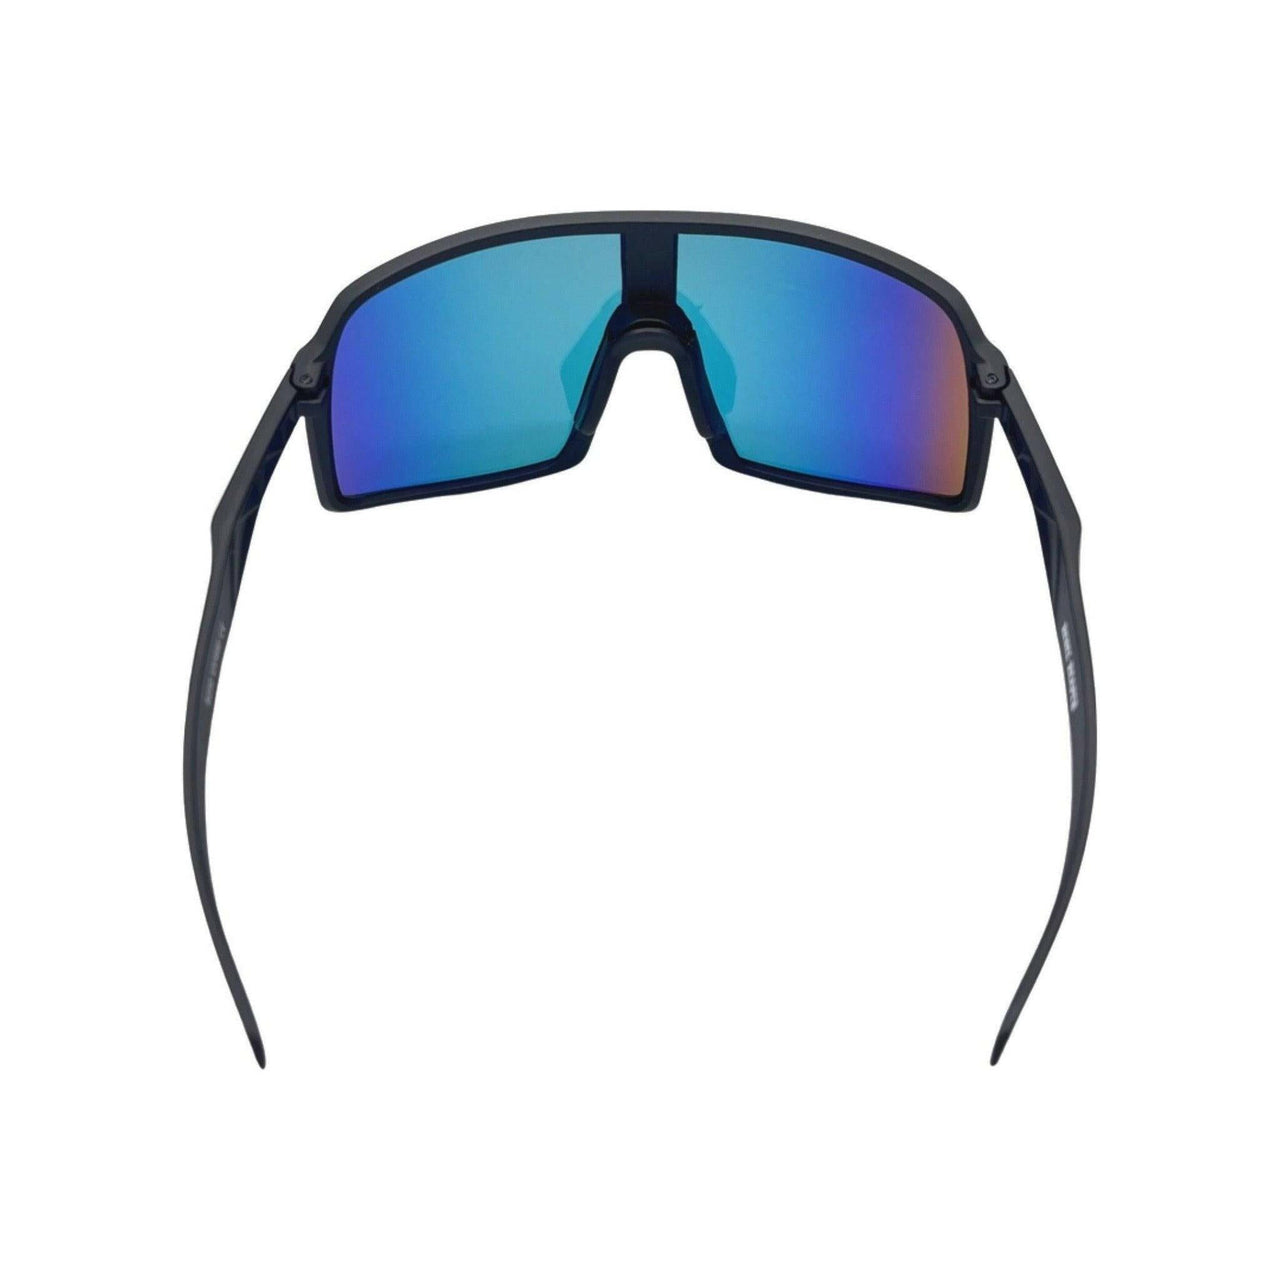 Yeti Red Mirror Polarized Lens Sunglasses - Rebel Reaper Clothing Company Sunglasses